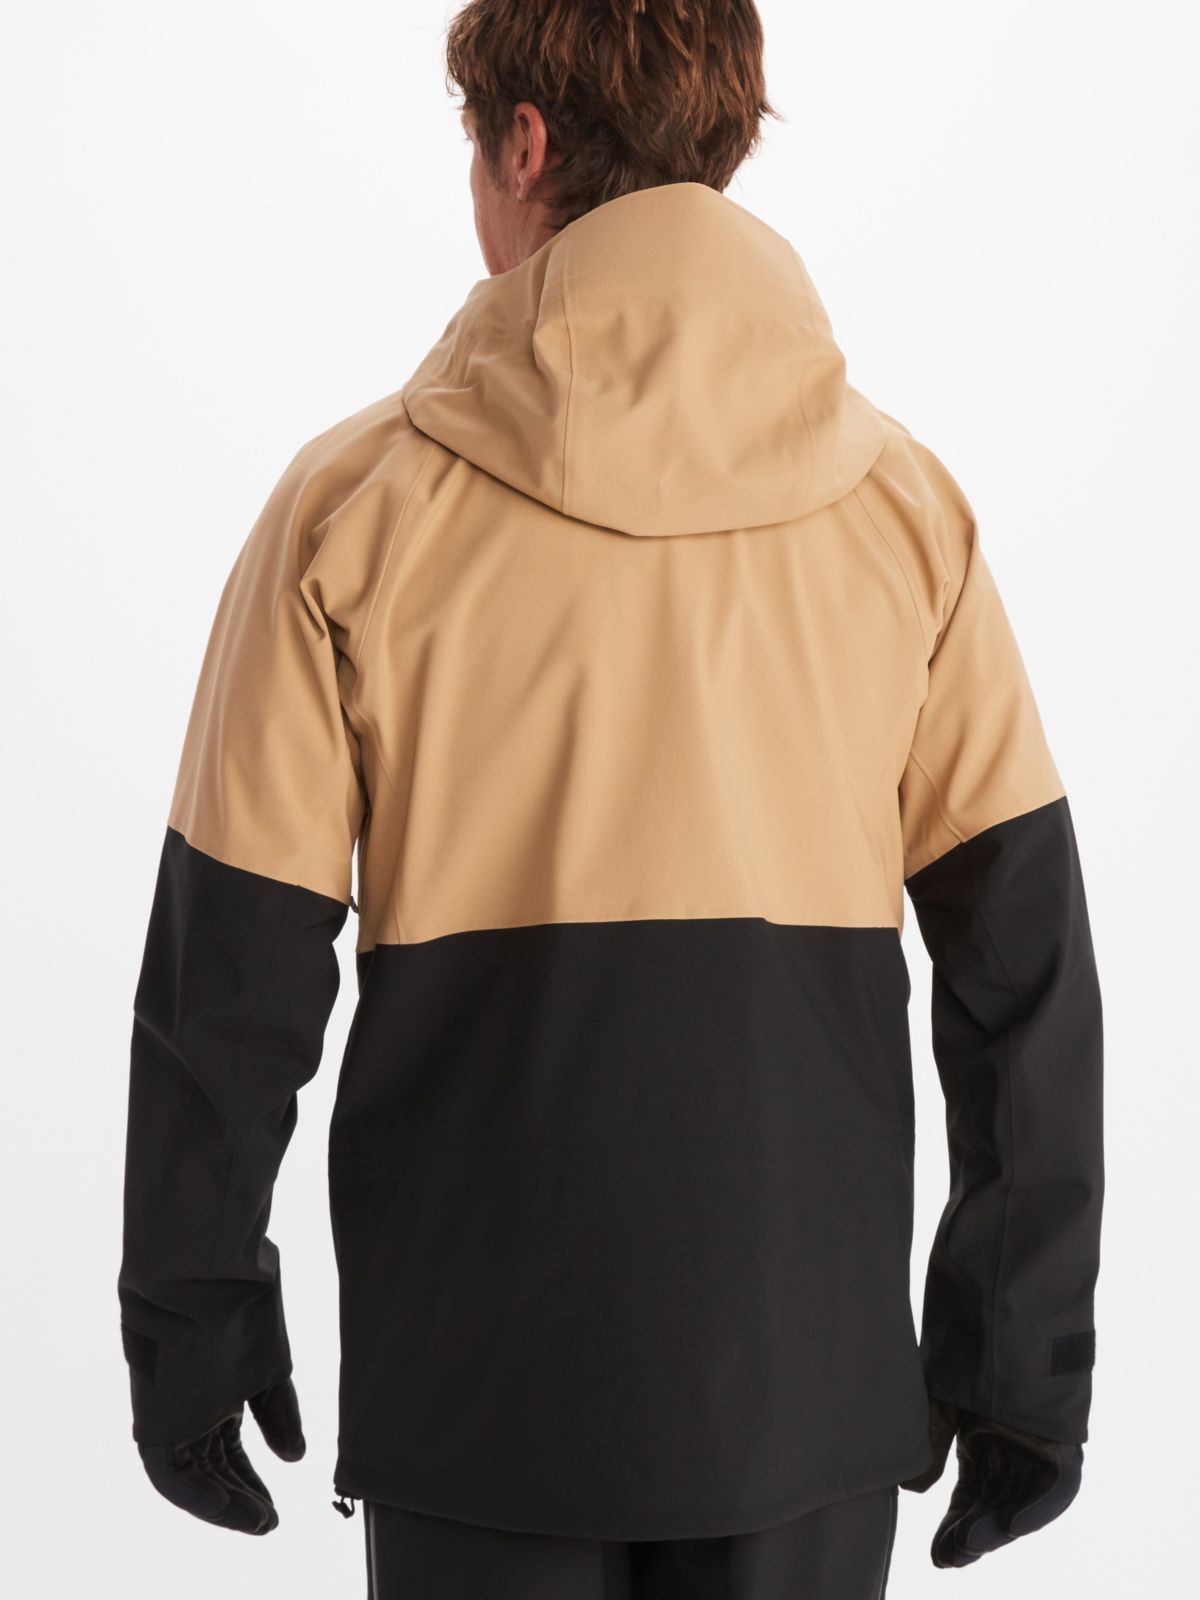 Model wearing two toned Marmot men's jacket in tan and black